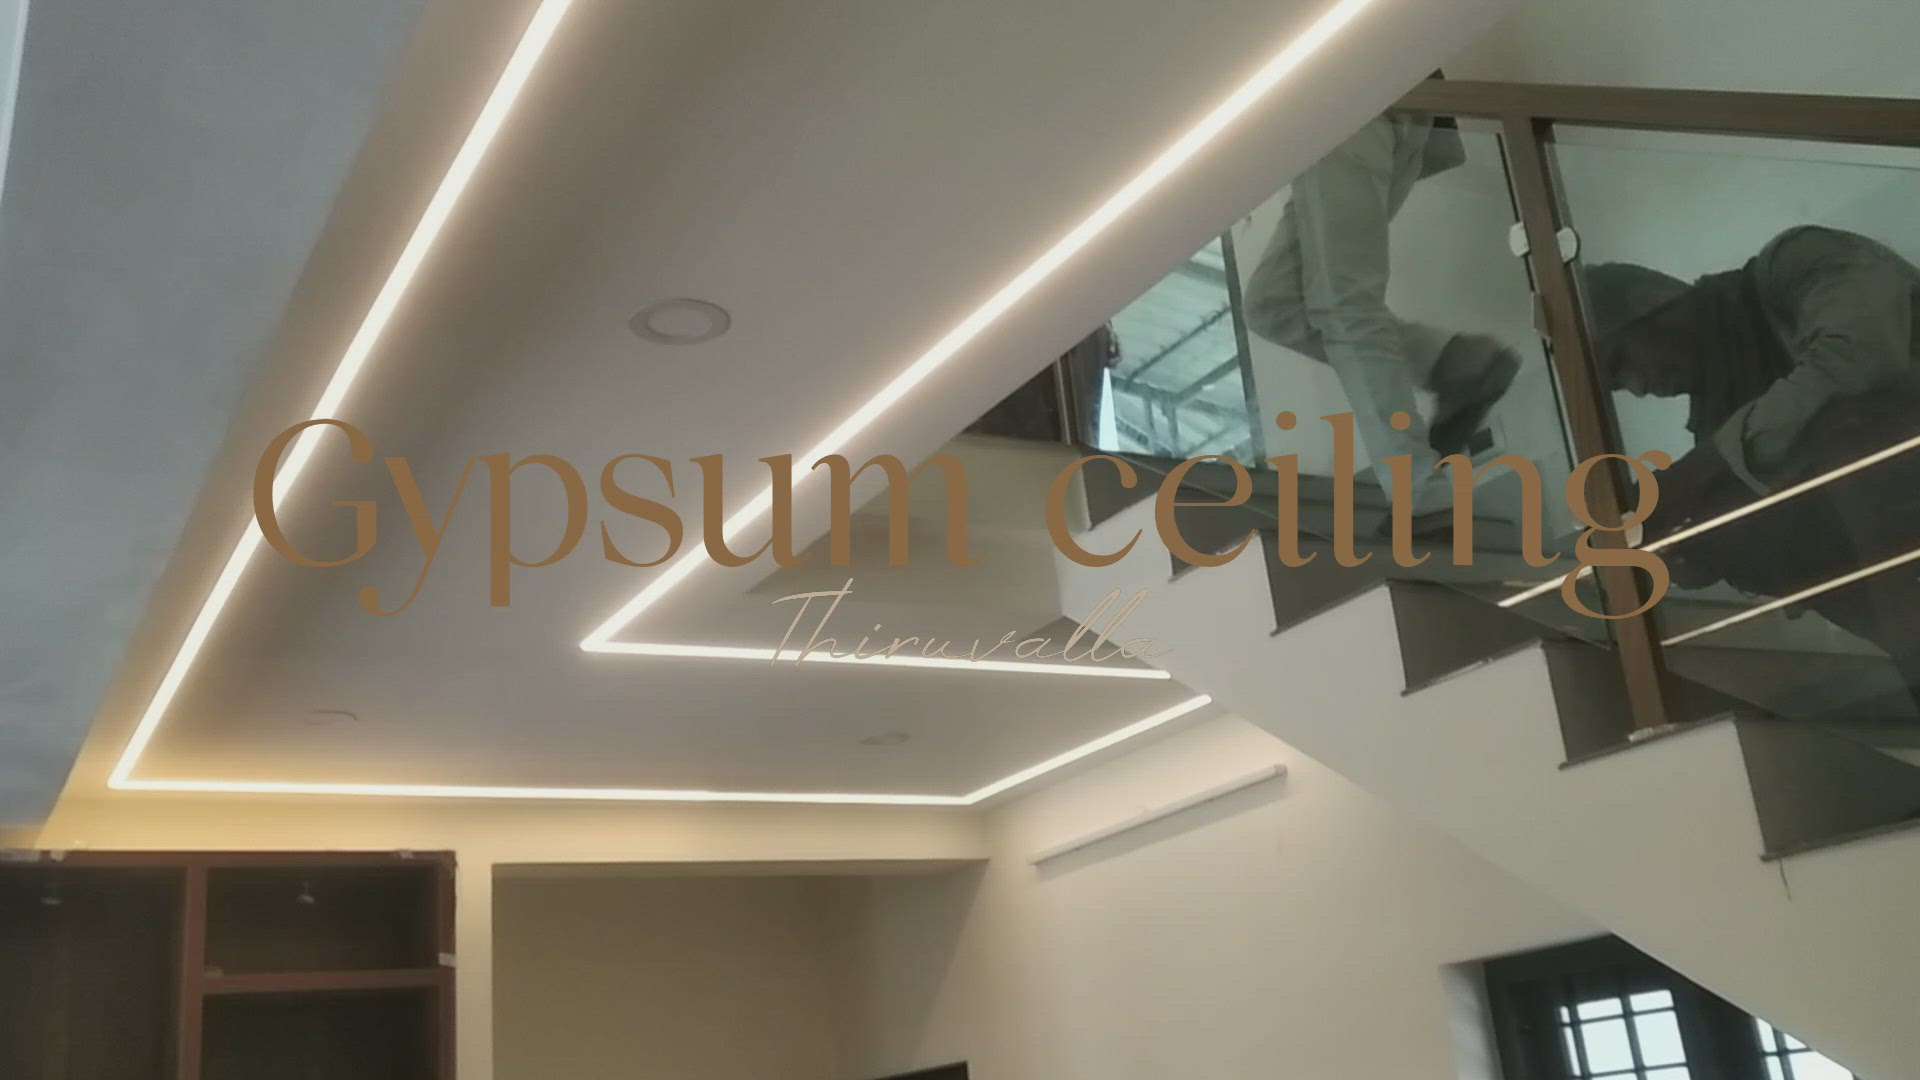 # Gypsum ceiling.
# Profile light ceiling.
# Kerala home interiors.
# home interiors.
# interiors.
8921596939